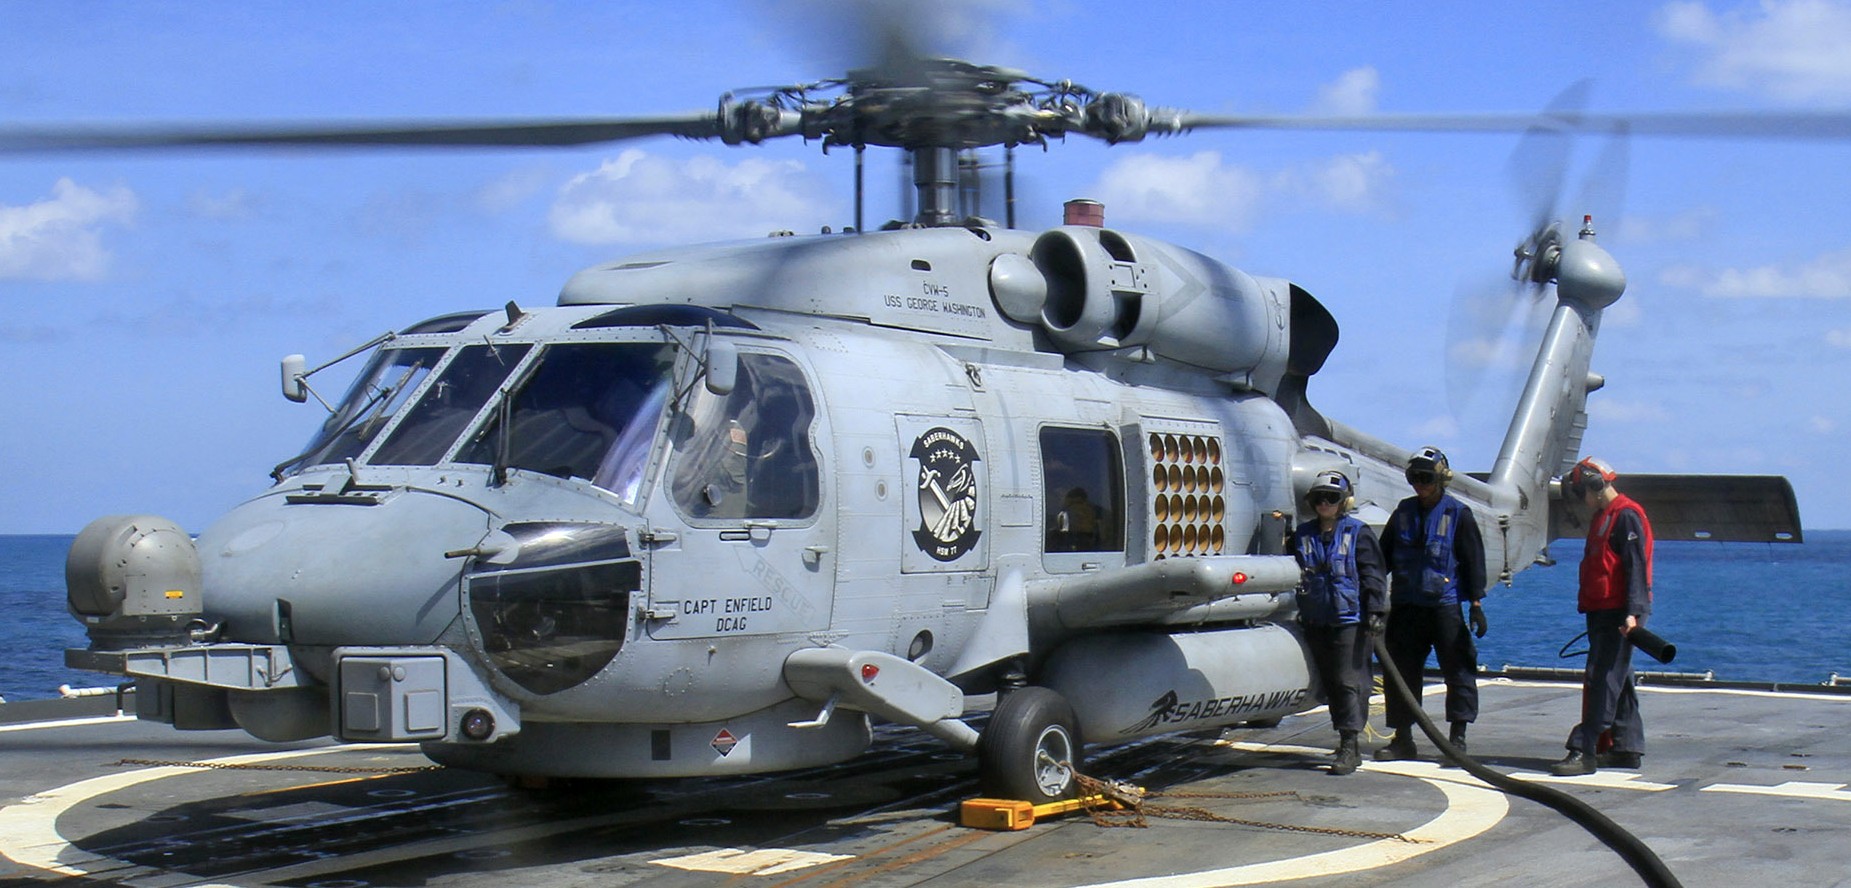 hsm-77 saberhawks helicopter maritime strike squadron us navy sikorsky mh-60r seahawk naf atsugi japan forward deployed cvw-5